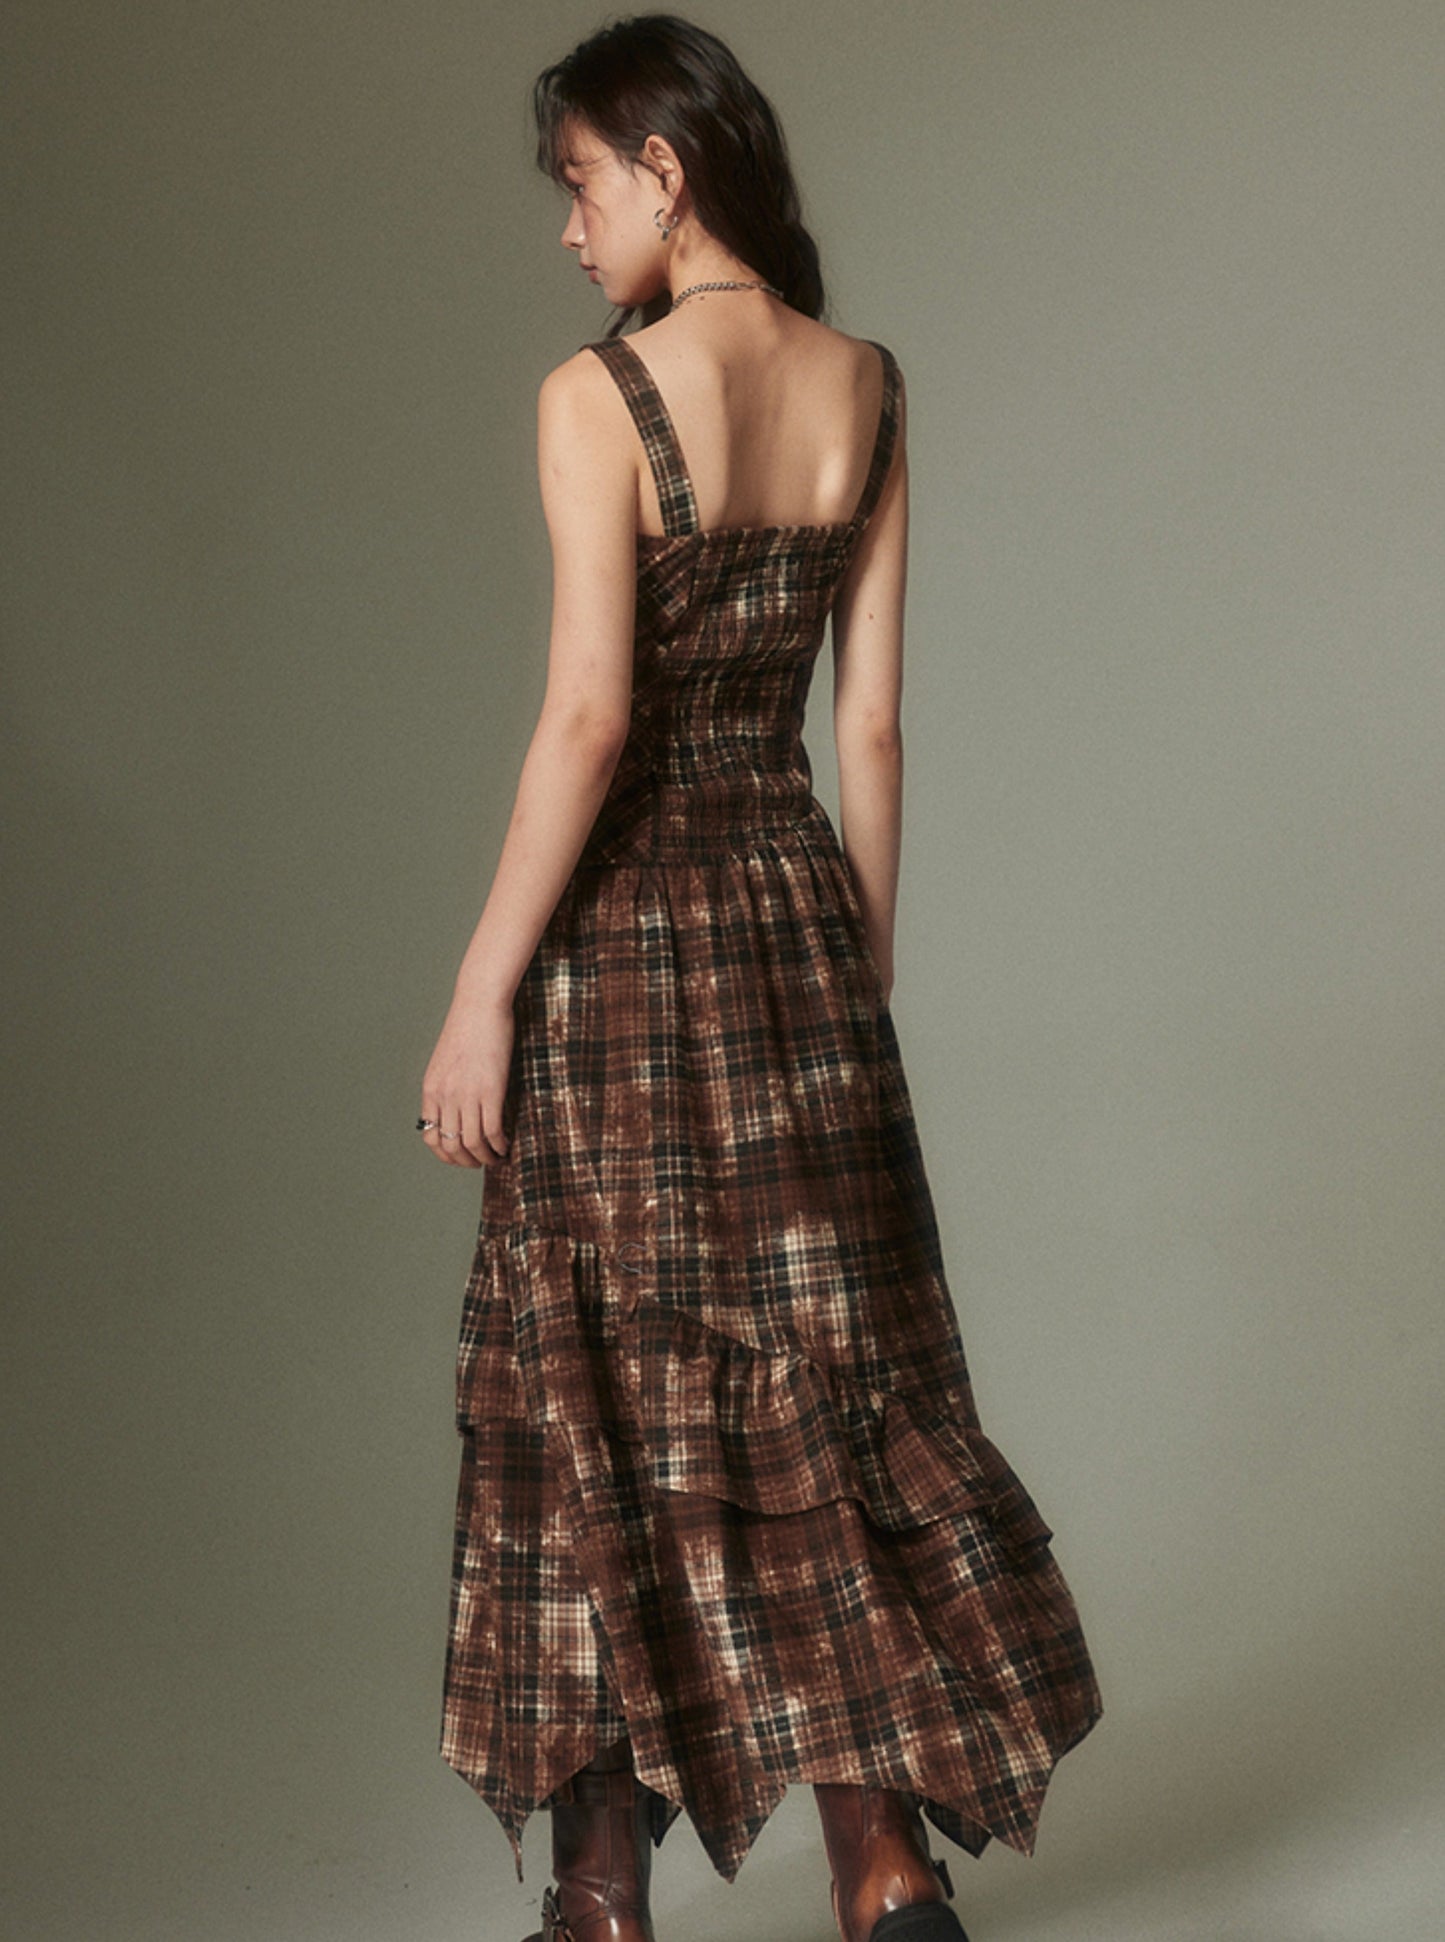 Original Design Mailard Vintage Kleid